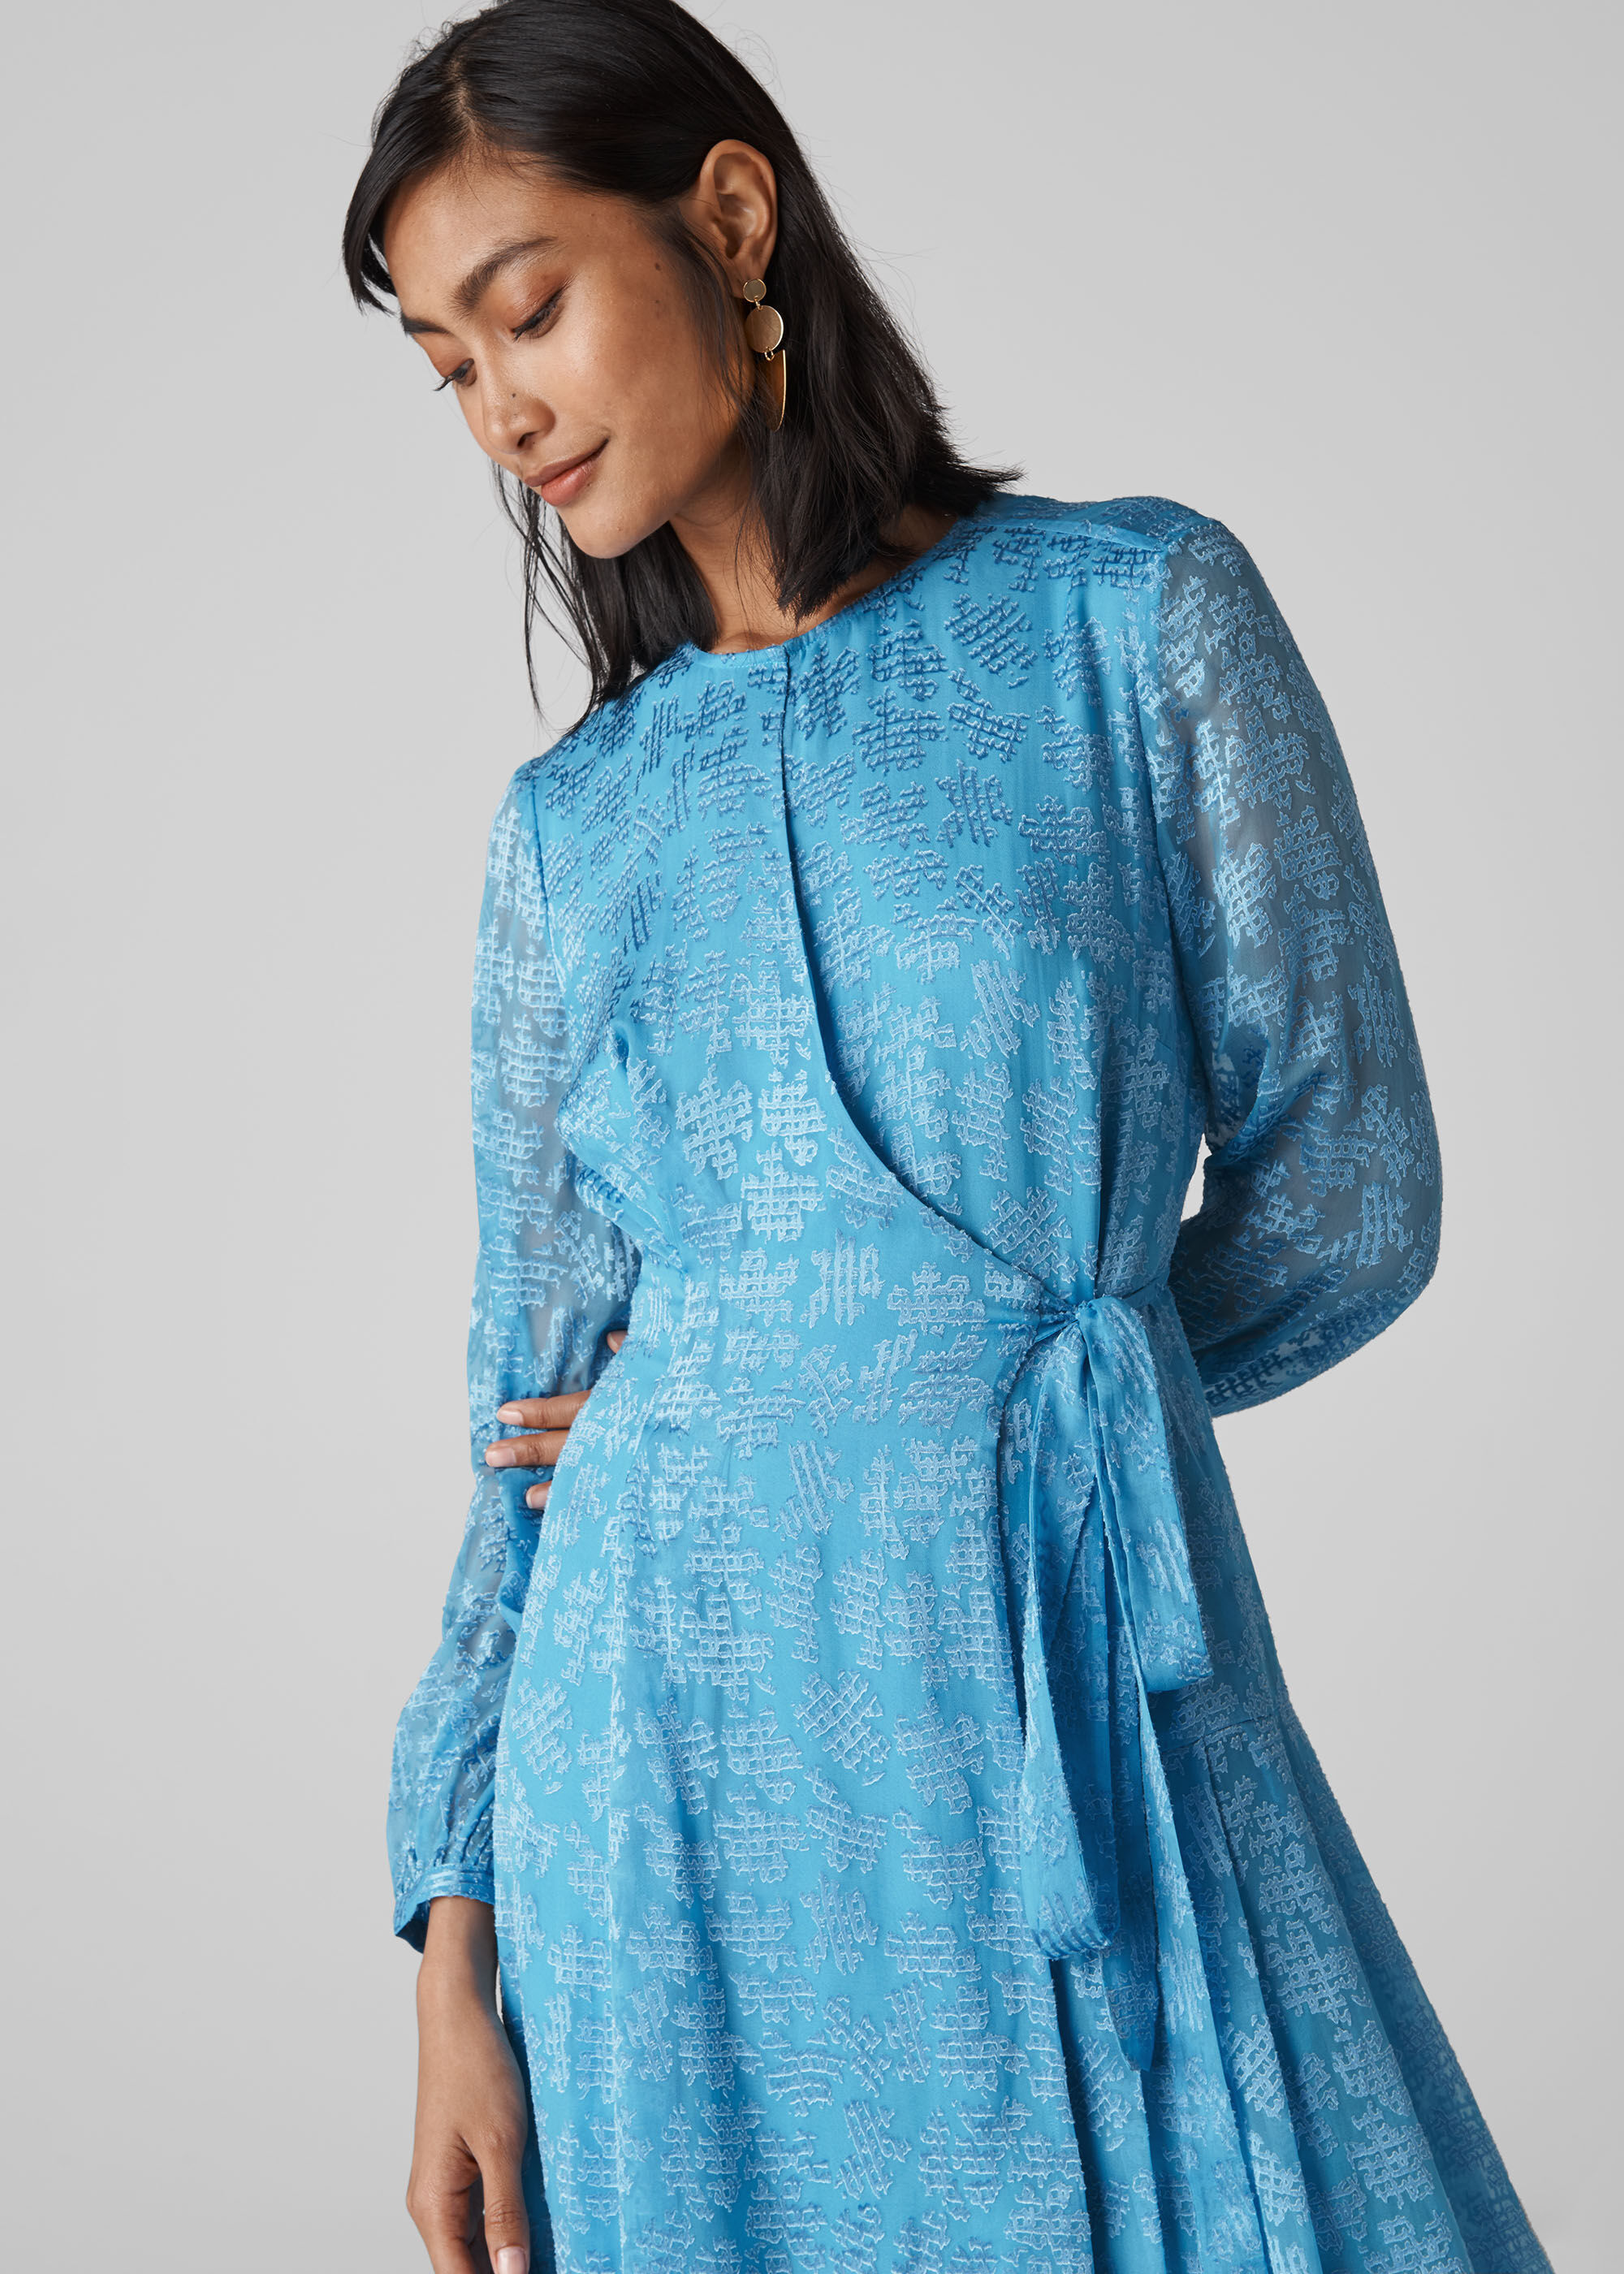 Pale Blue Summer Dress Online Store, UP TO 51% OFF | www.ldeventos.com